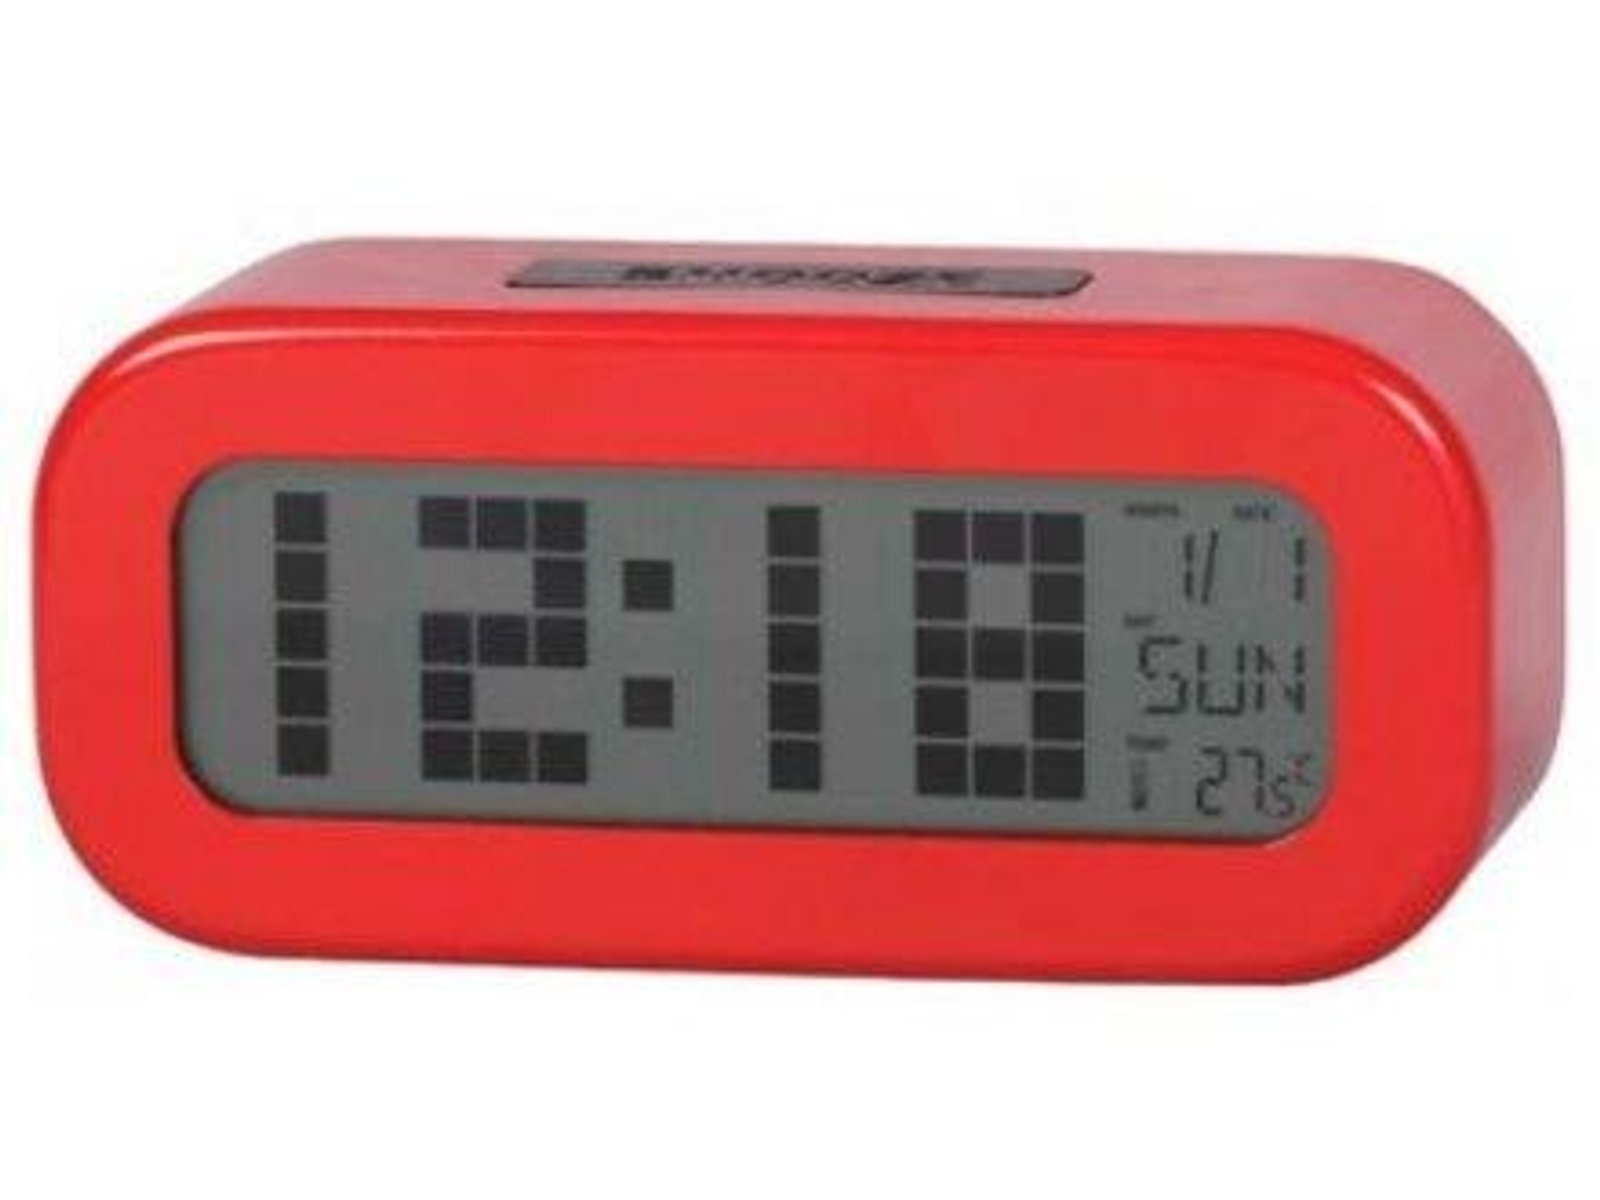 Reloj despertador - 8412765661426 DAEWOO, Rojo